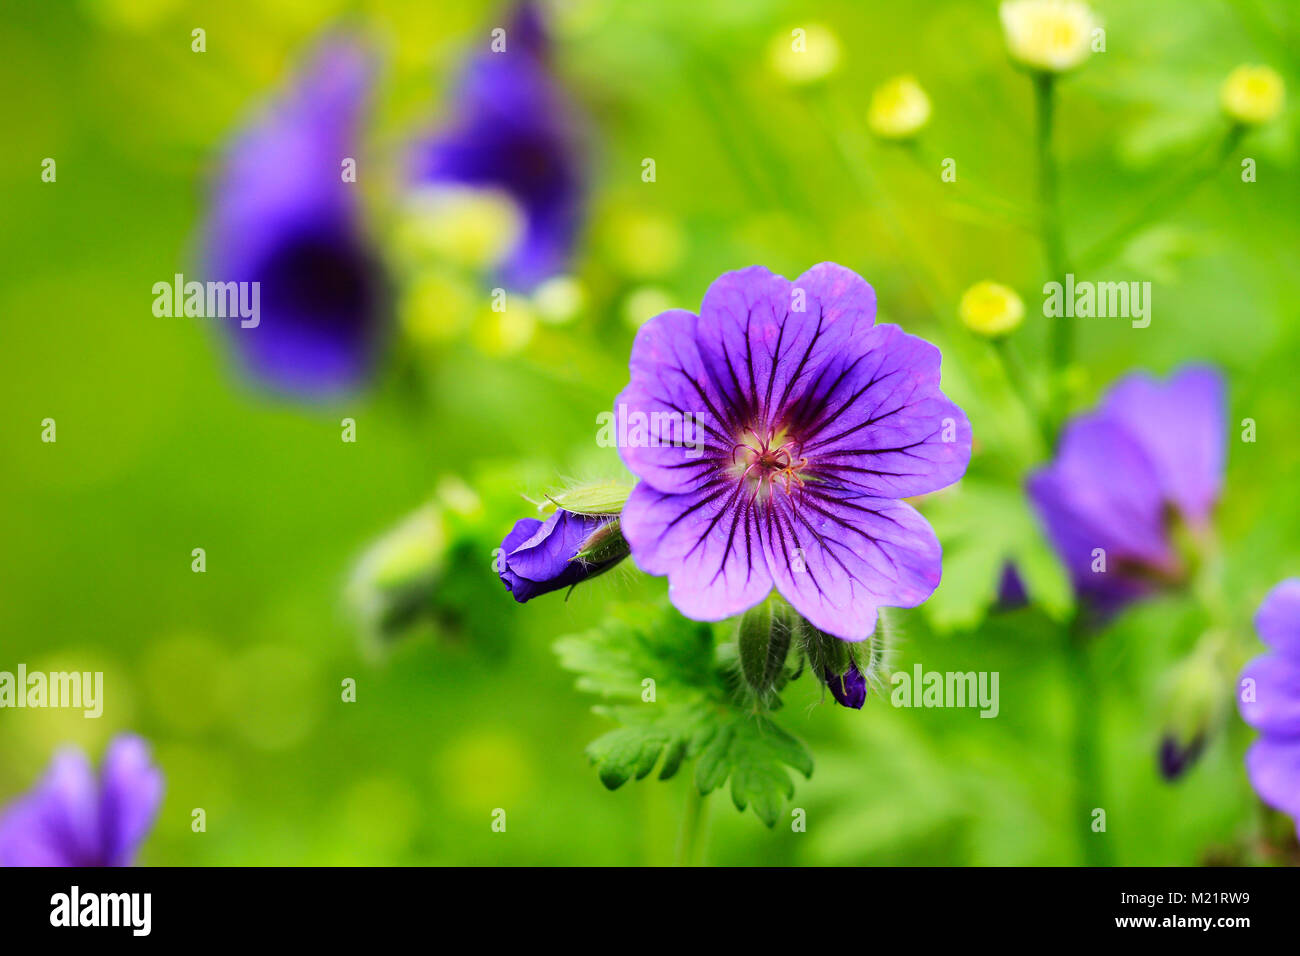 Geranium flower close up Stock Photo